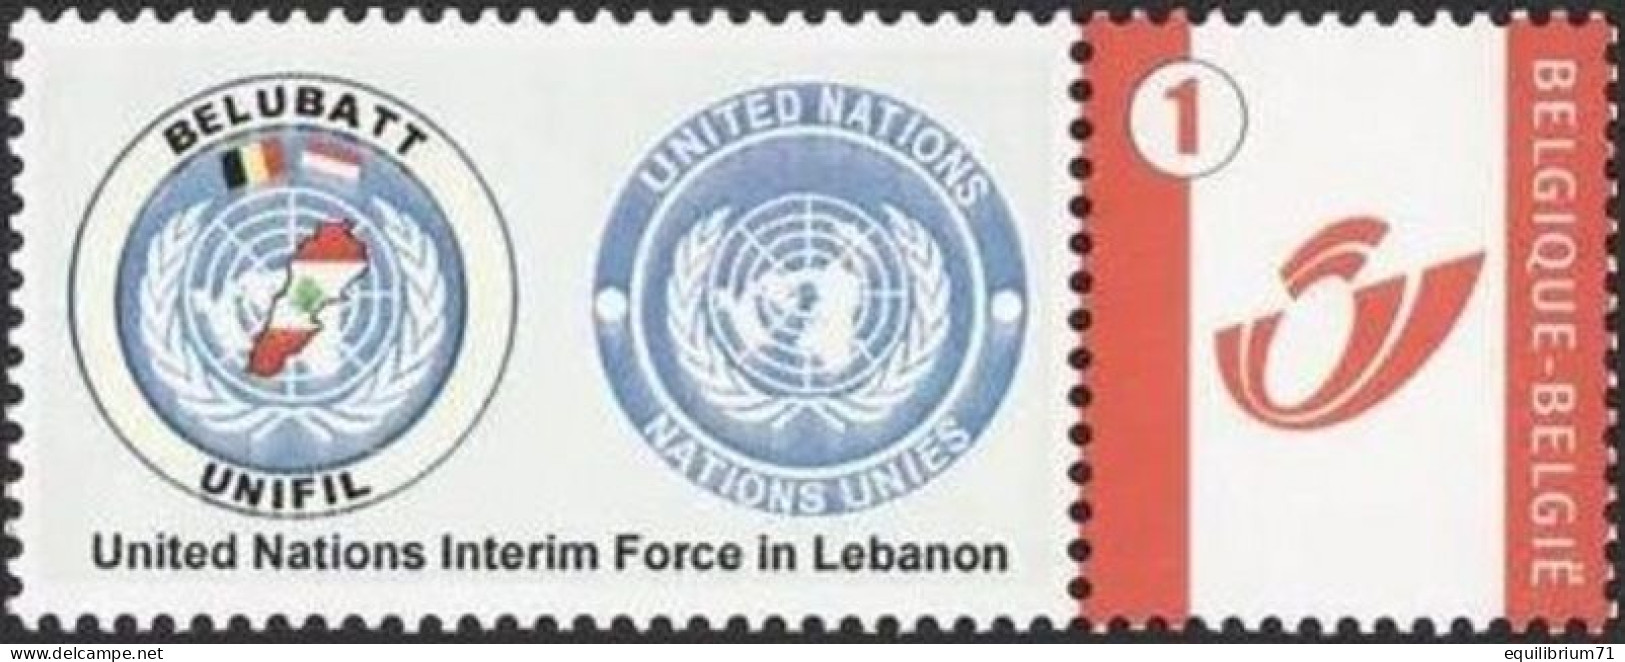 DUOSTAMP/MYSTAMP** - BELUBATT - UNIFIL - United Nations Interim Force In Lebanon - UNITED NATIONS / NATIONS UNIES - Postfris